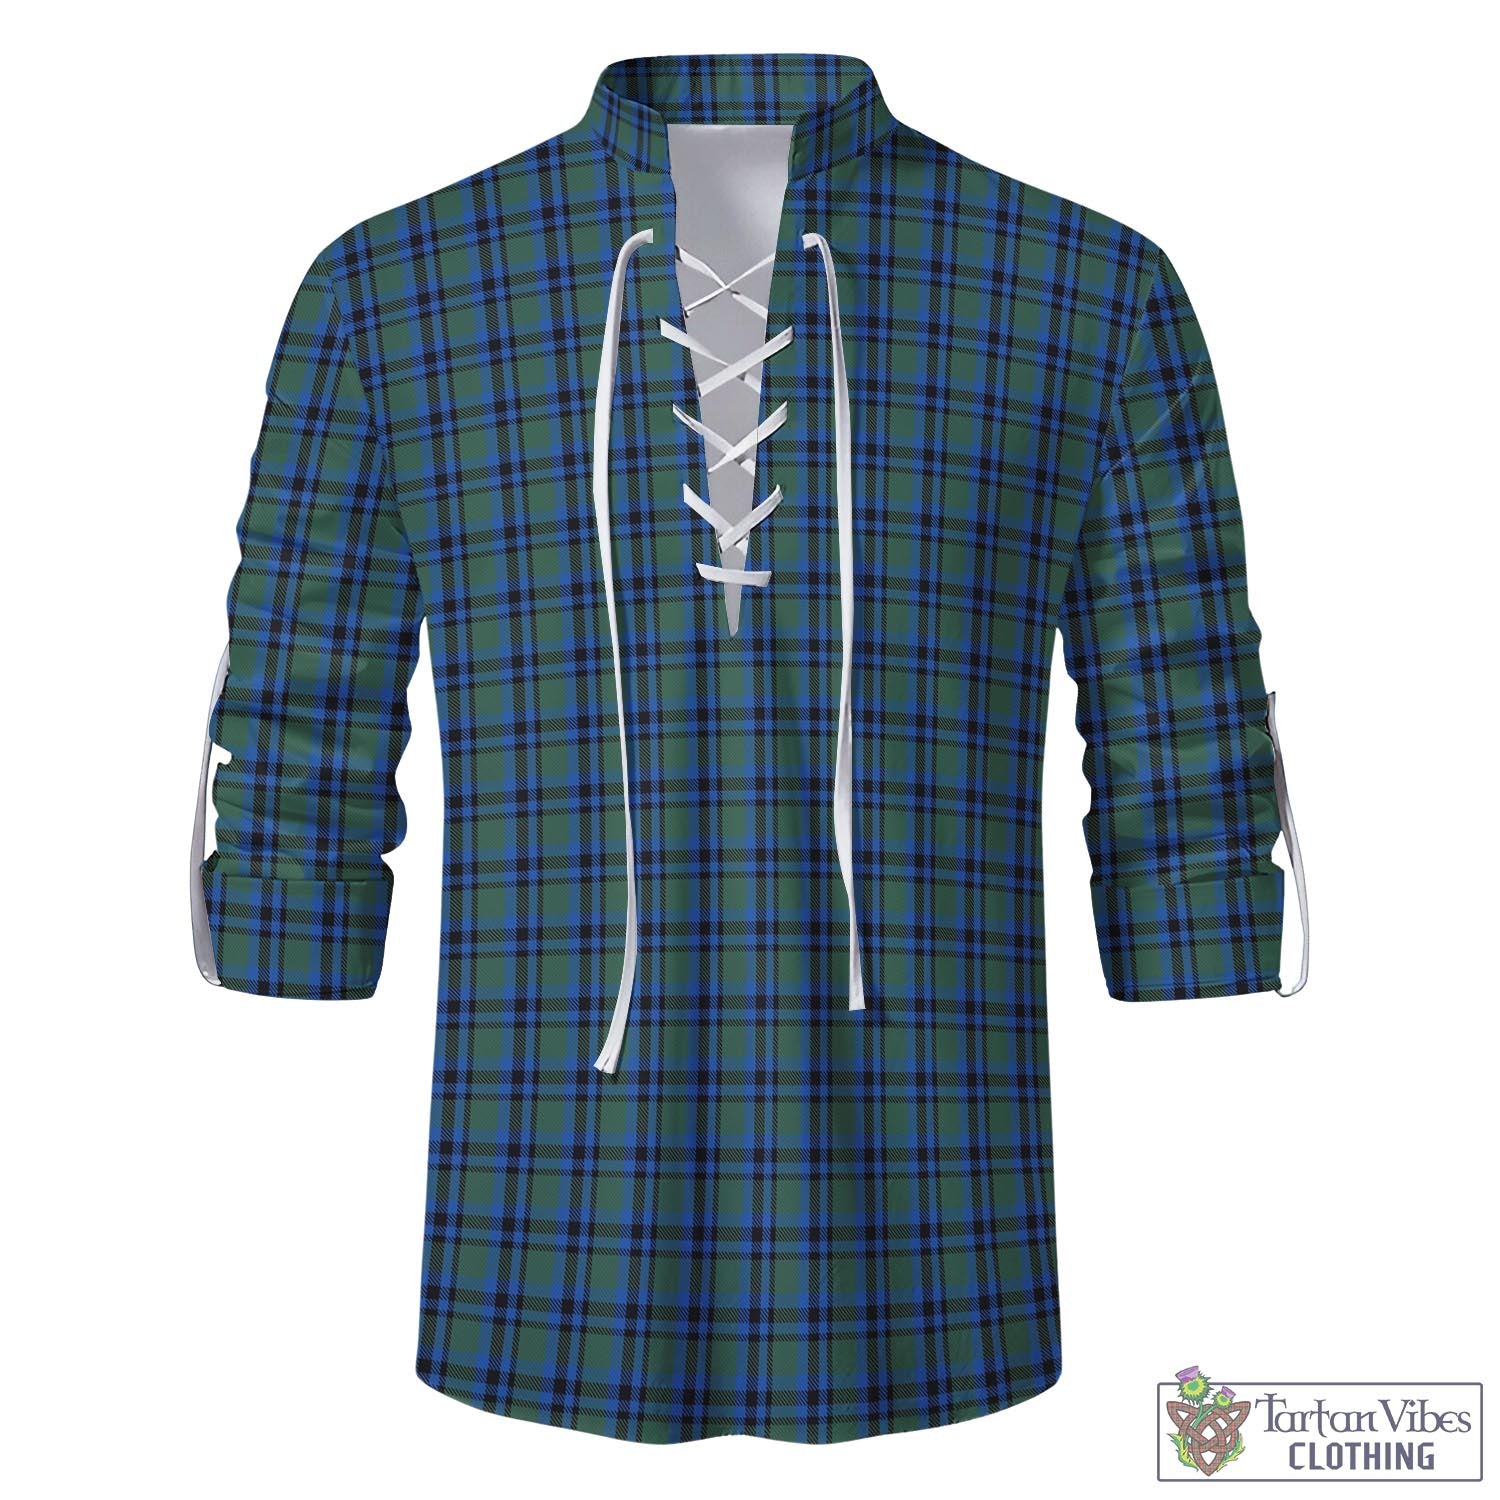 Tartan Vibes Clothing Falconer Tartan Men's Scottish Traditional Jacobite Ghillie Kilt Shirt